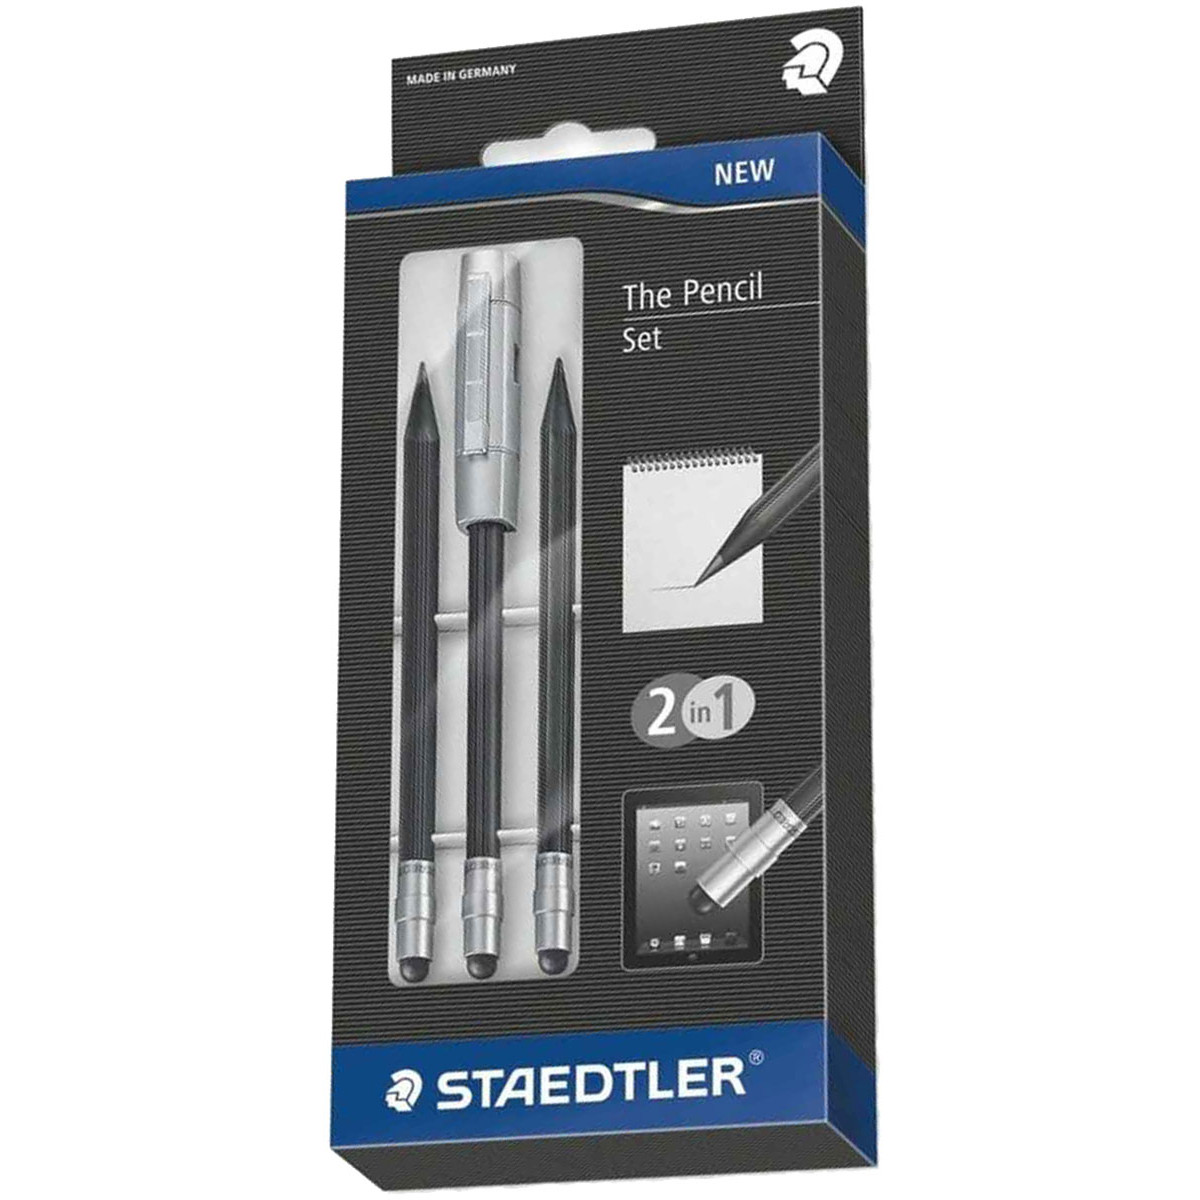 Staedtler Sketching Pencils and Extender (Pack of 3)